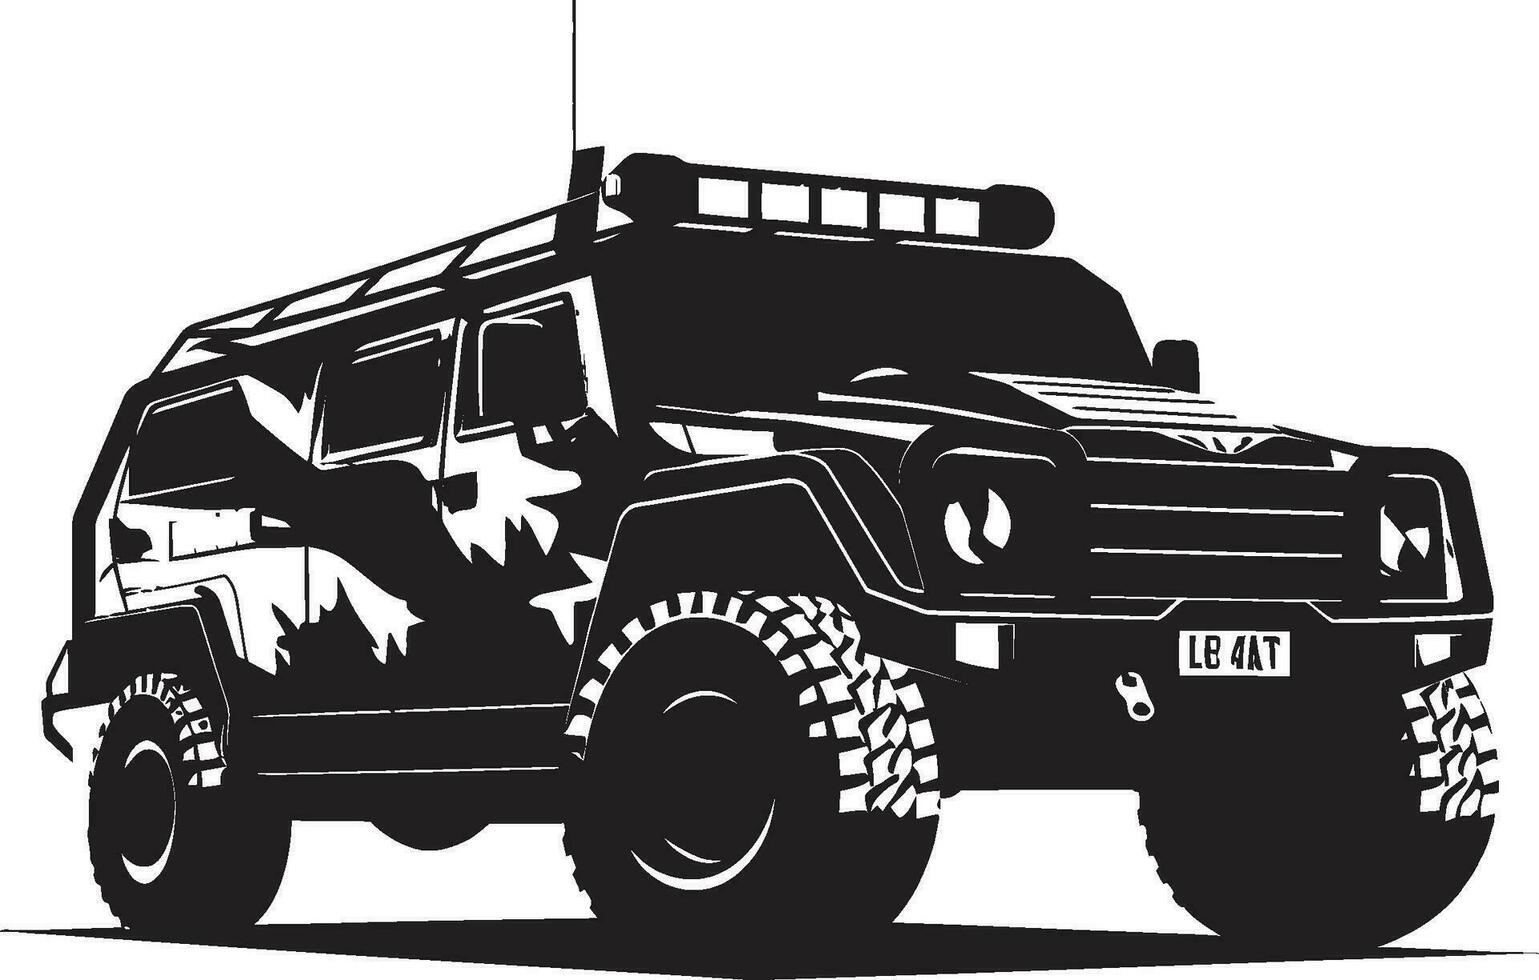 Defensive Expedition Militär- Fahrzeug Symbol Krieger s Reiten schwarz Heer 4x4 Logo vektor